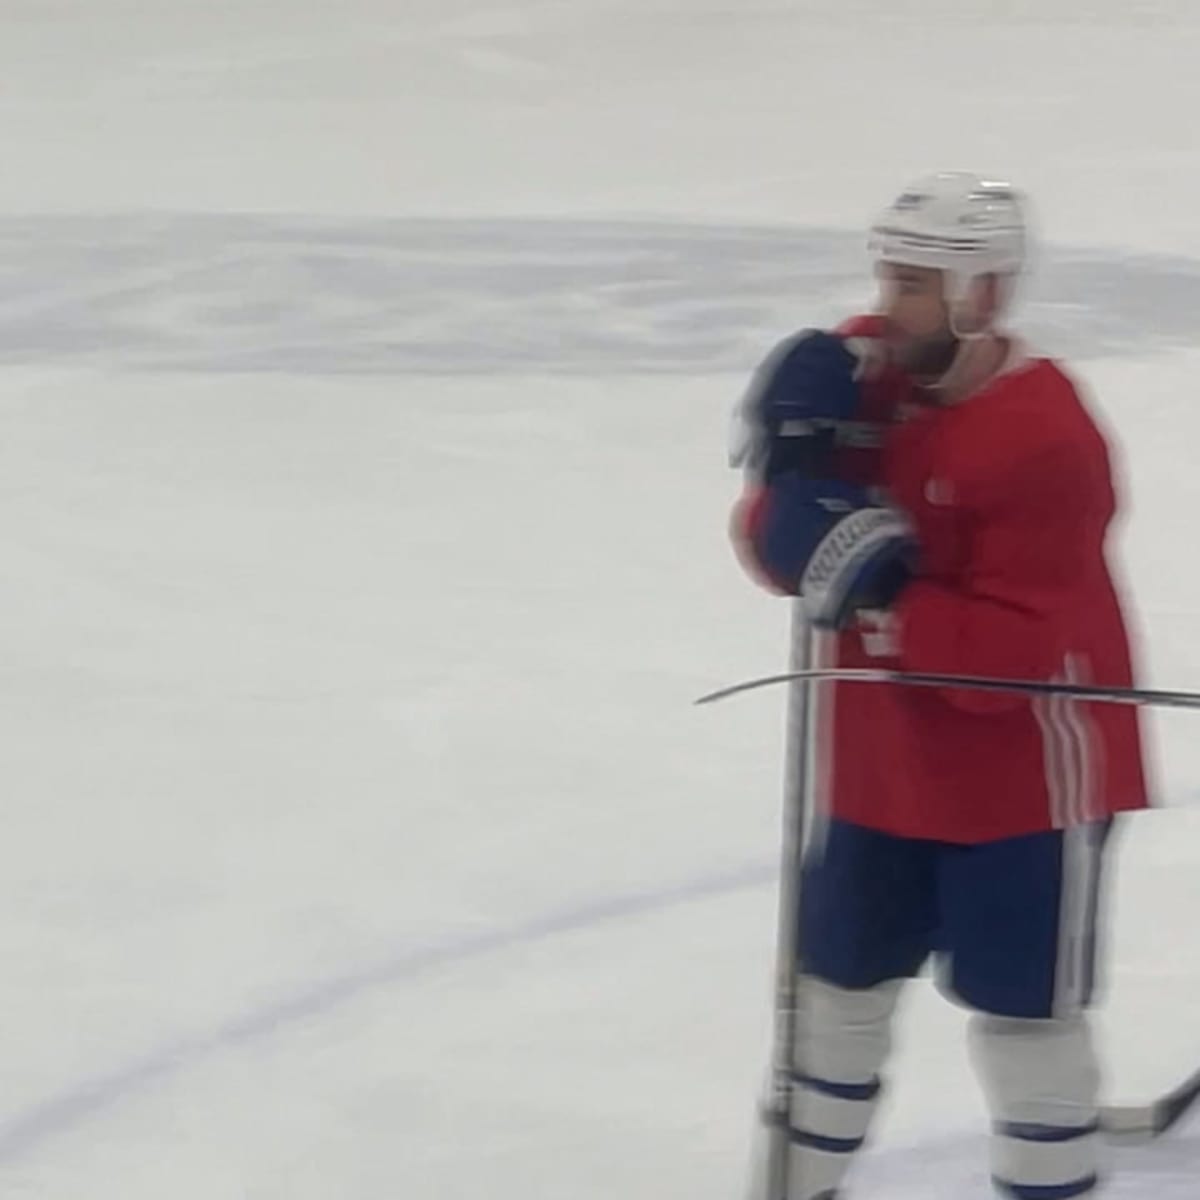 Leafs goalie Matt Murray going on LTIR has a strange odour to it